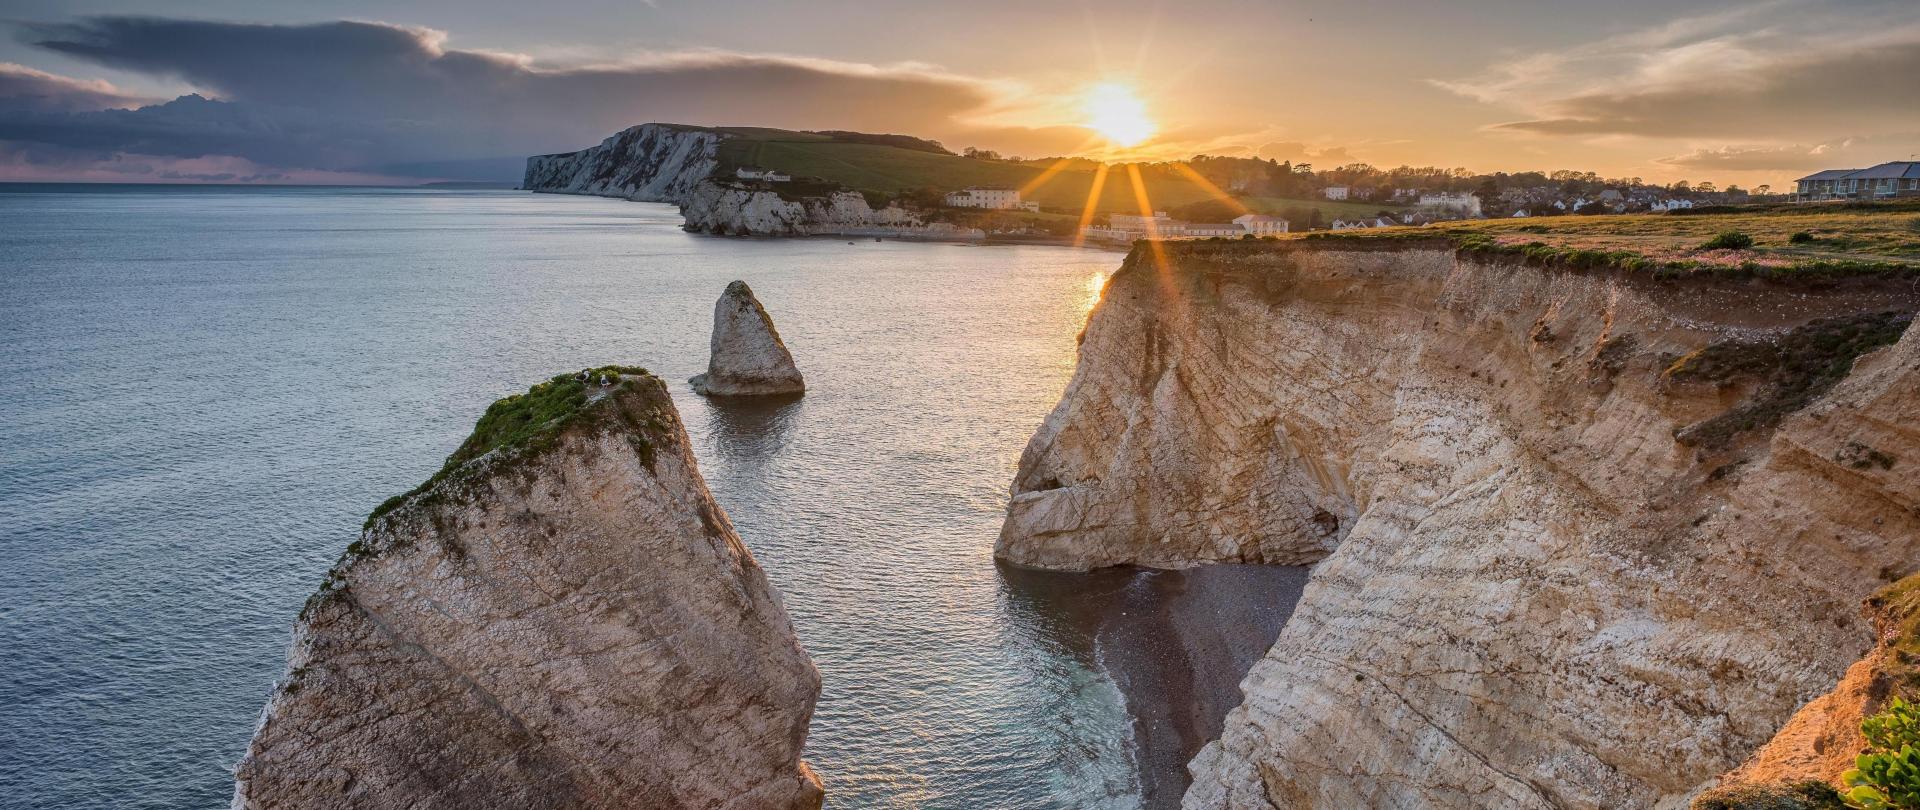 Sunset over Freshwater Bay Isle of Wight England